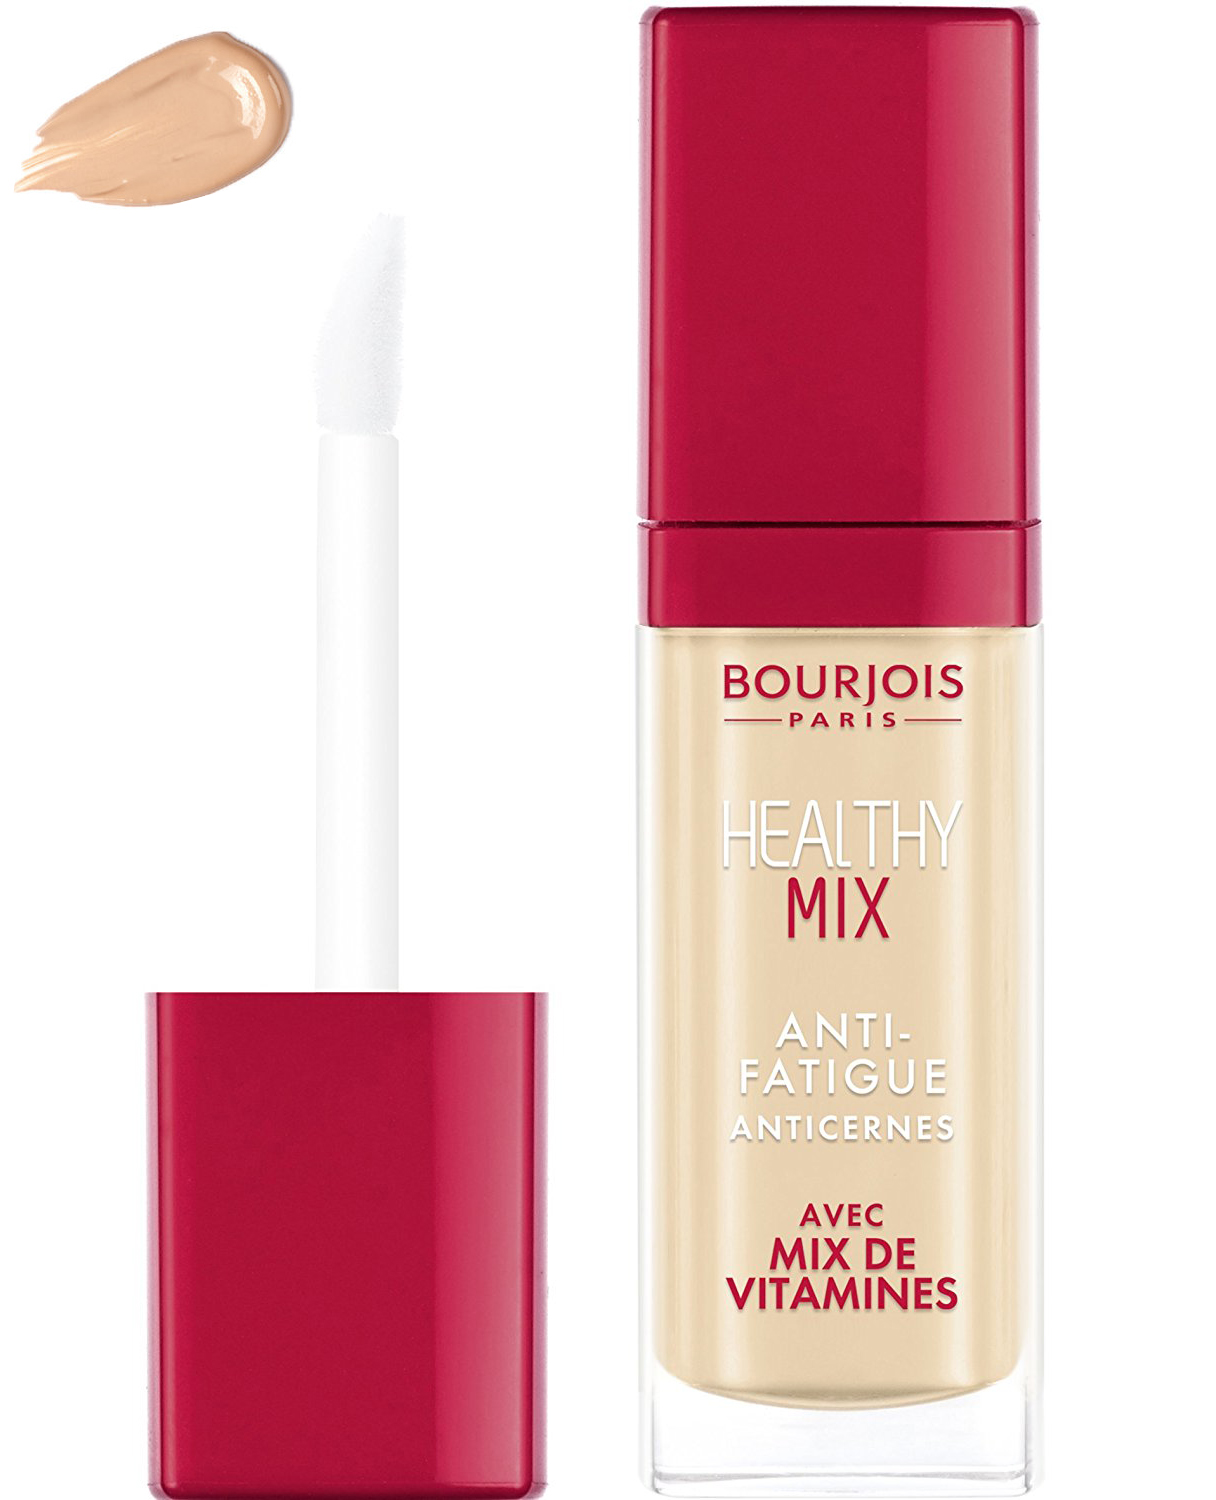 Bourjois Healthy Mix Anti-Fatigue Concealer - Medium